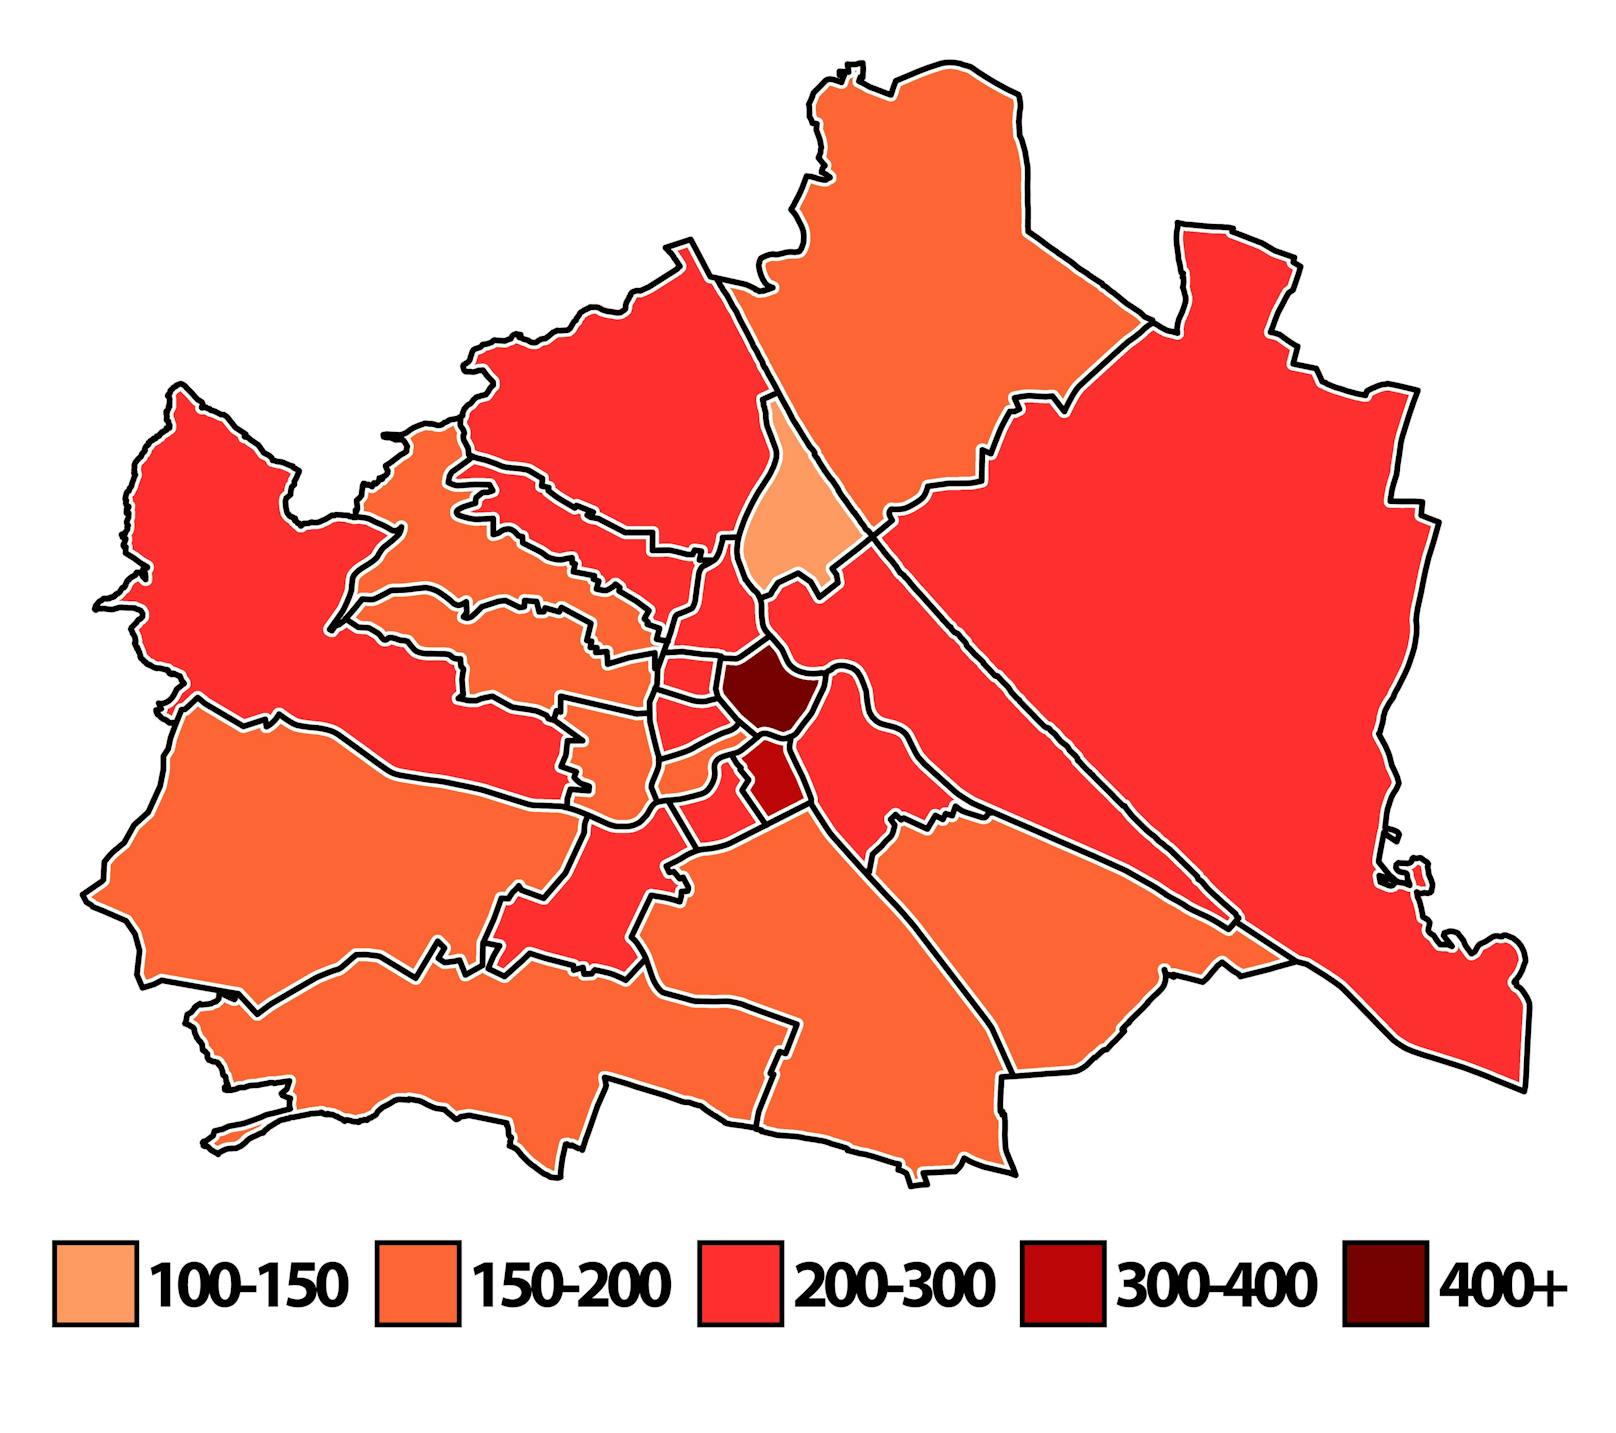 Corona-Karte der Wiener Bezirke am <a target="_blank" data-li-document-ref="100181736" href="https://www.heute.at/g/corona-karte-von-wien-ein-bezirk-sprengt-die-skala-100181736">30. Dezember 2021</a>.